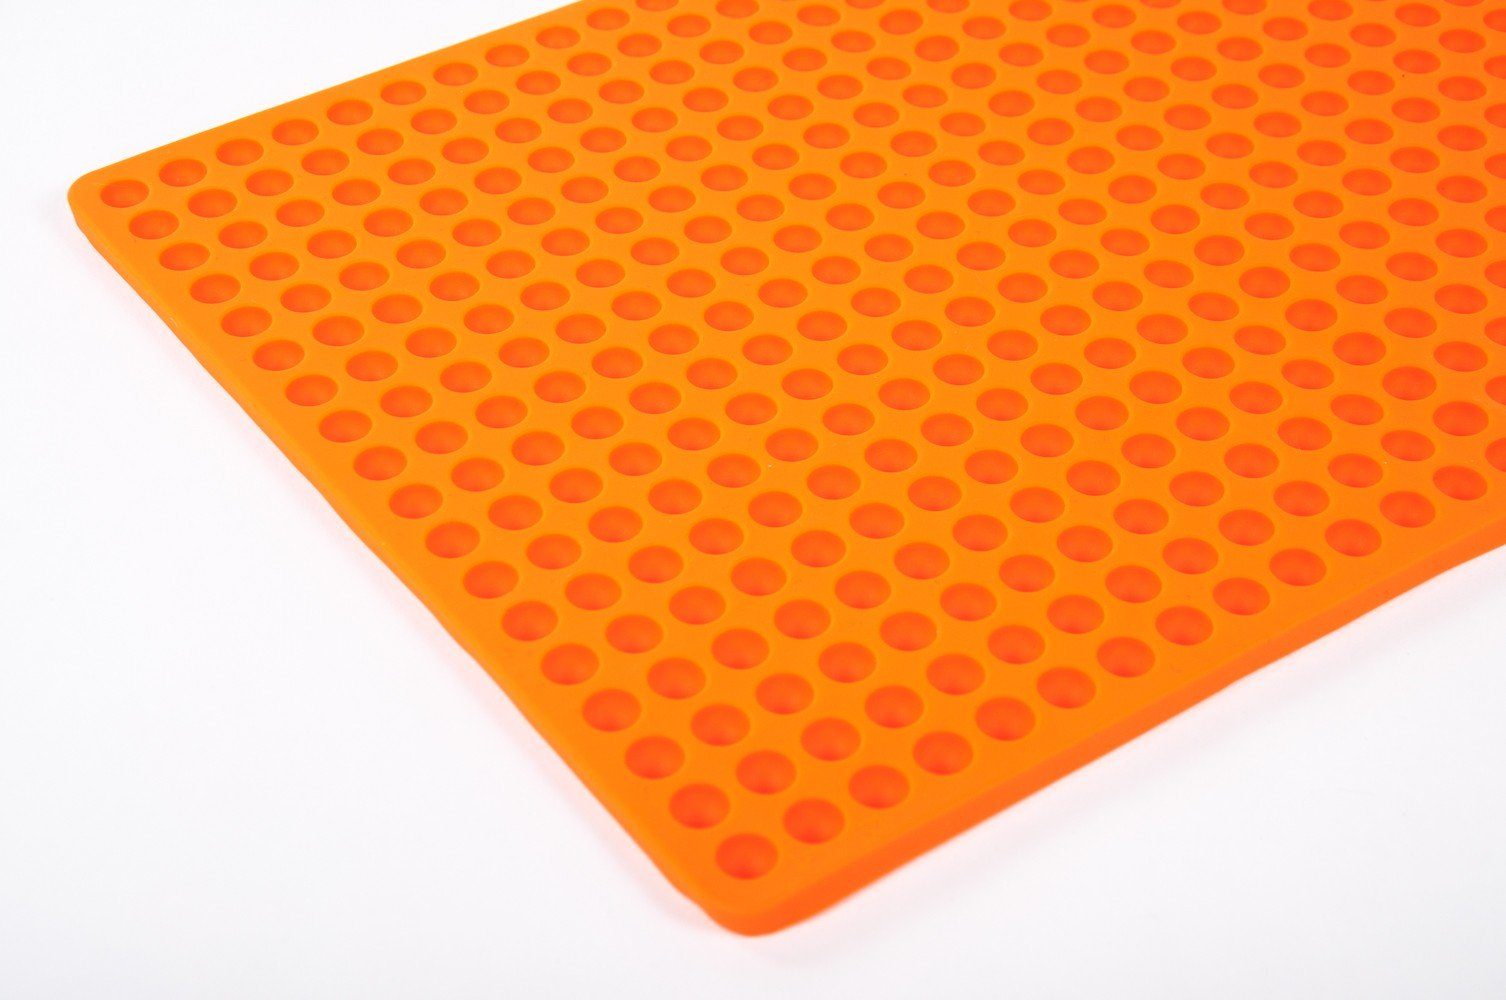 Backmatte Ausrollmatte Noppen 4er-Set BURI Dauerbackmatte mit Unte, Silikon Backunterlage Silikon